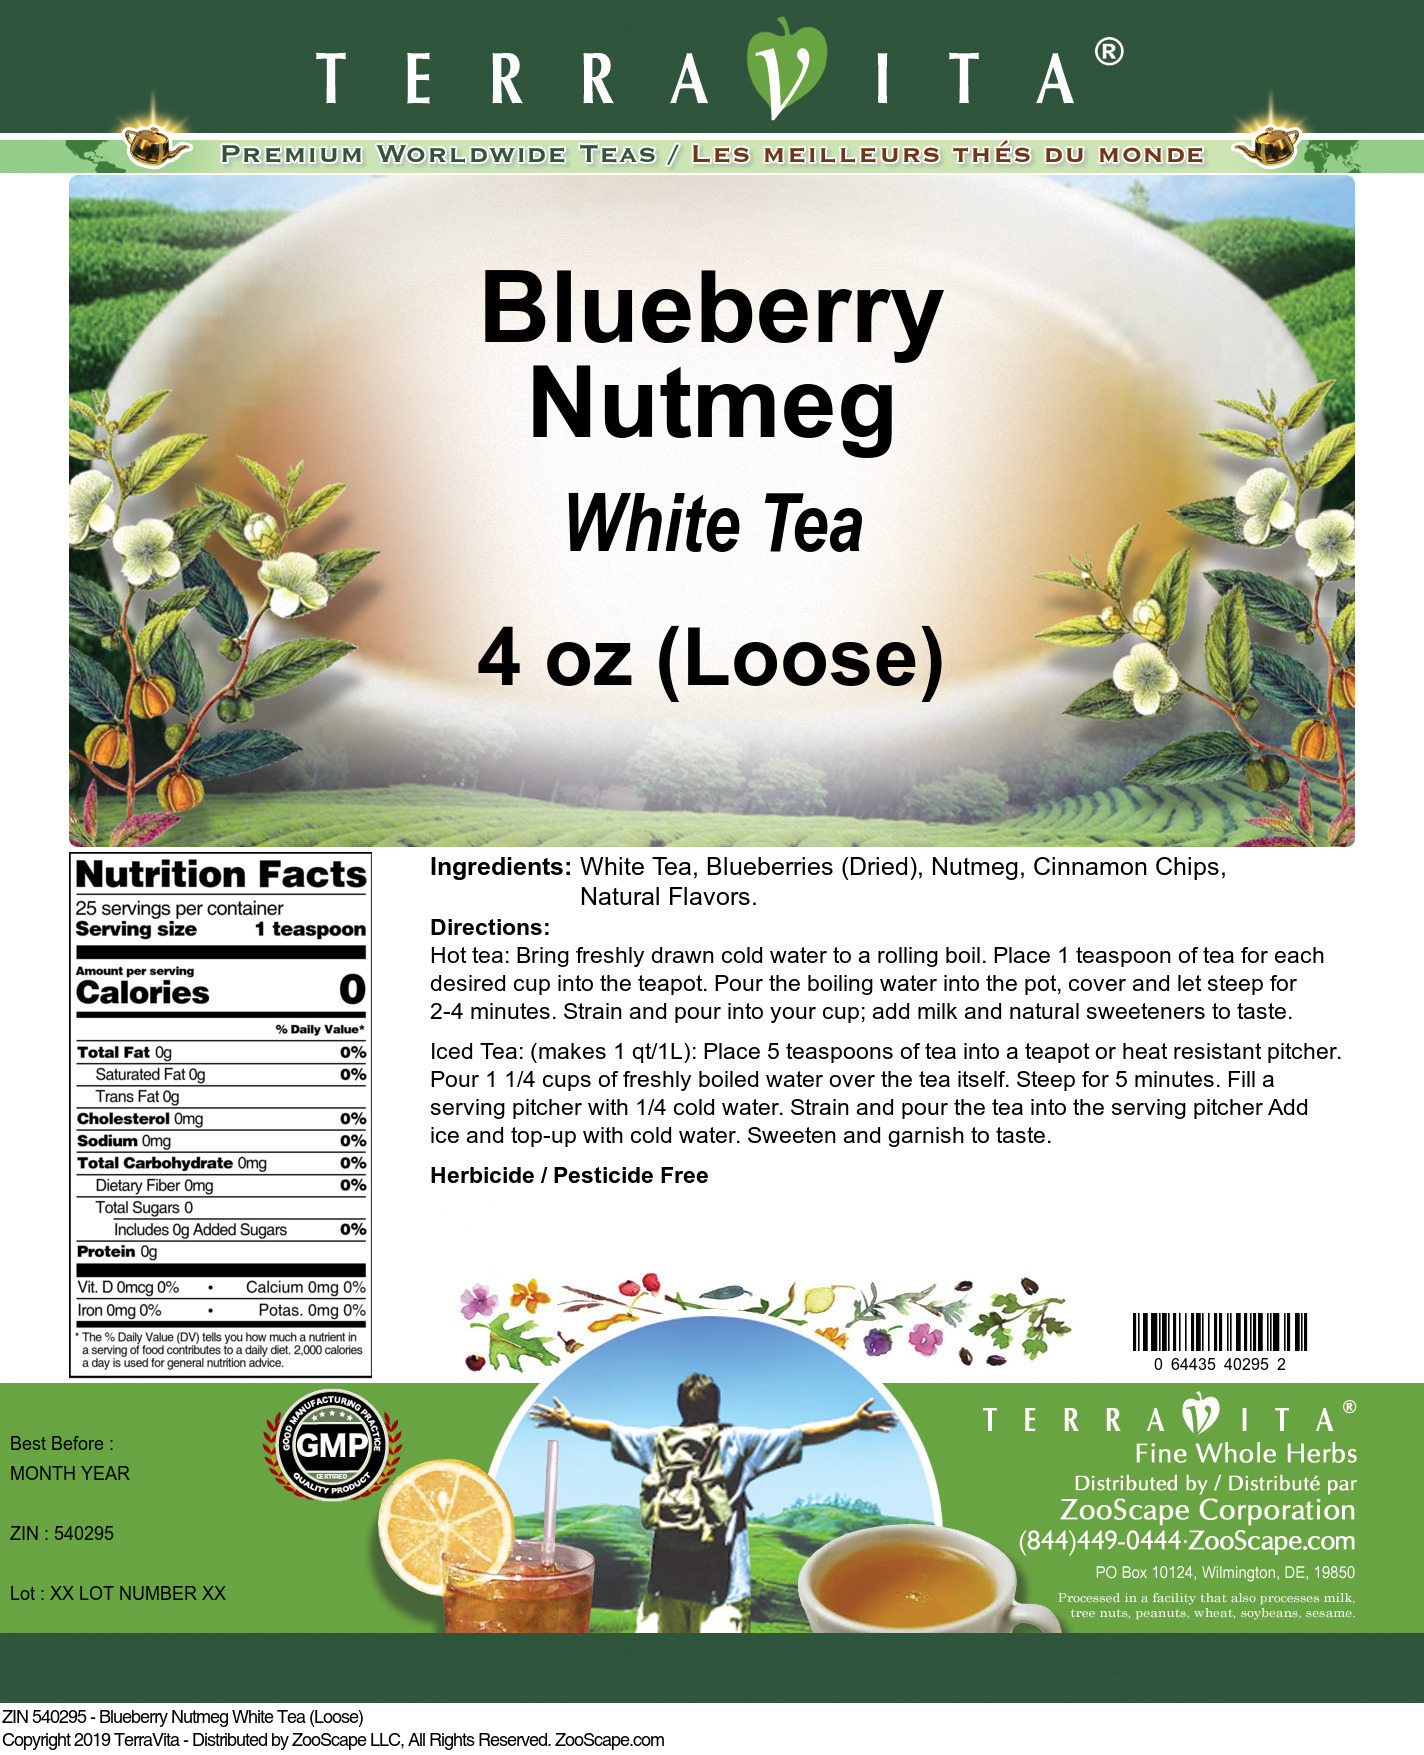 Blueberry Nutmeg White Tea (Loose) - Label